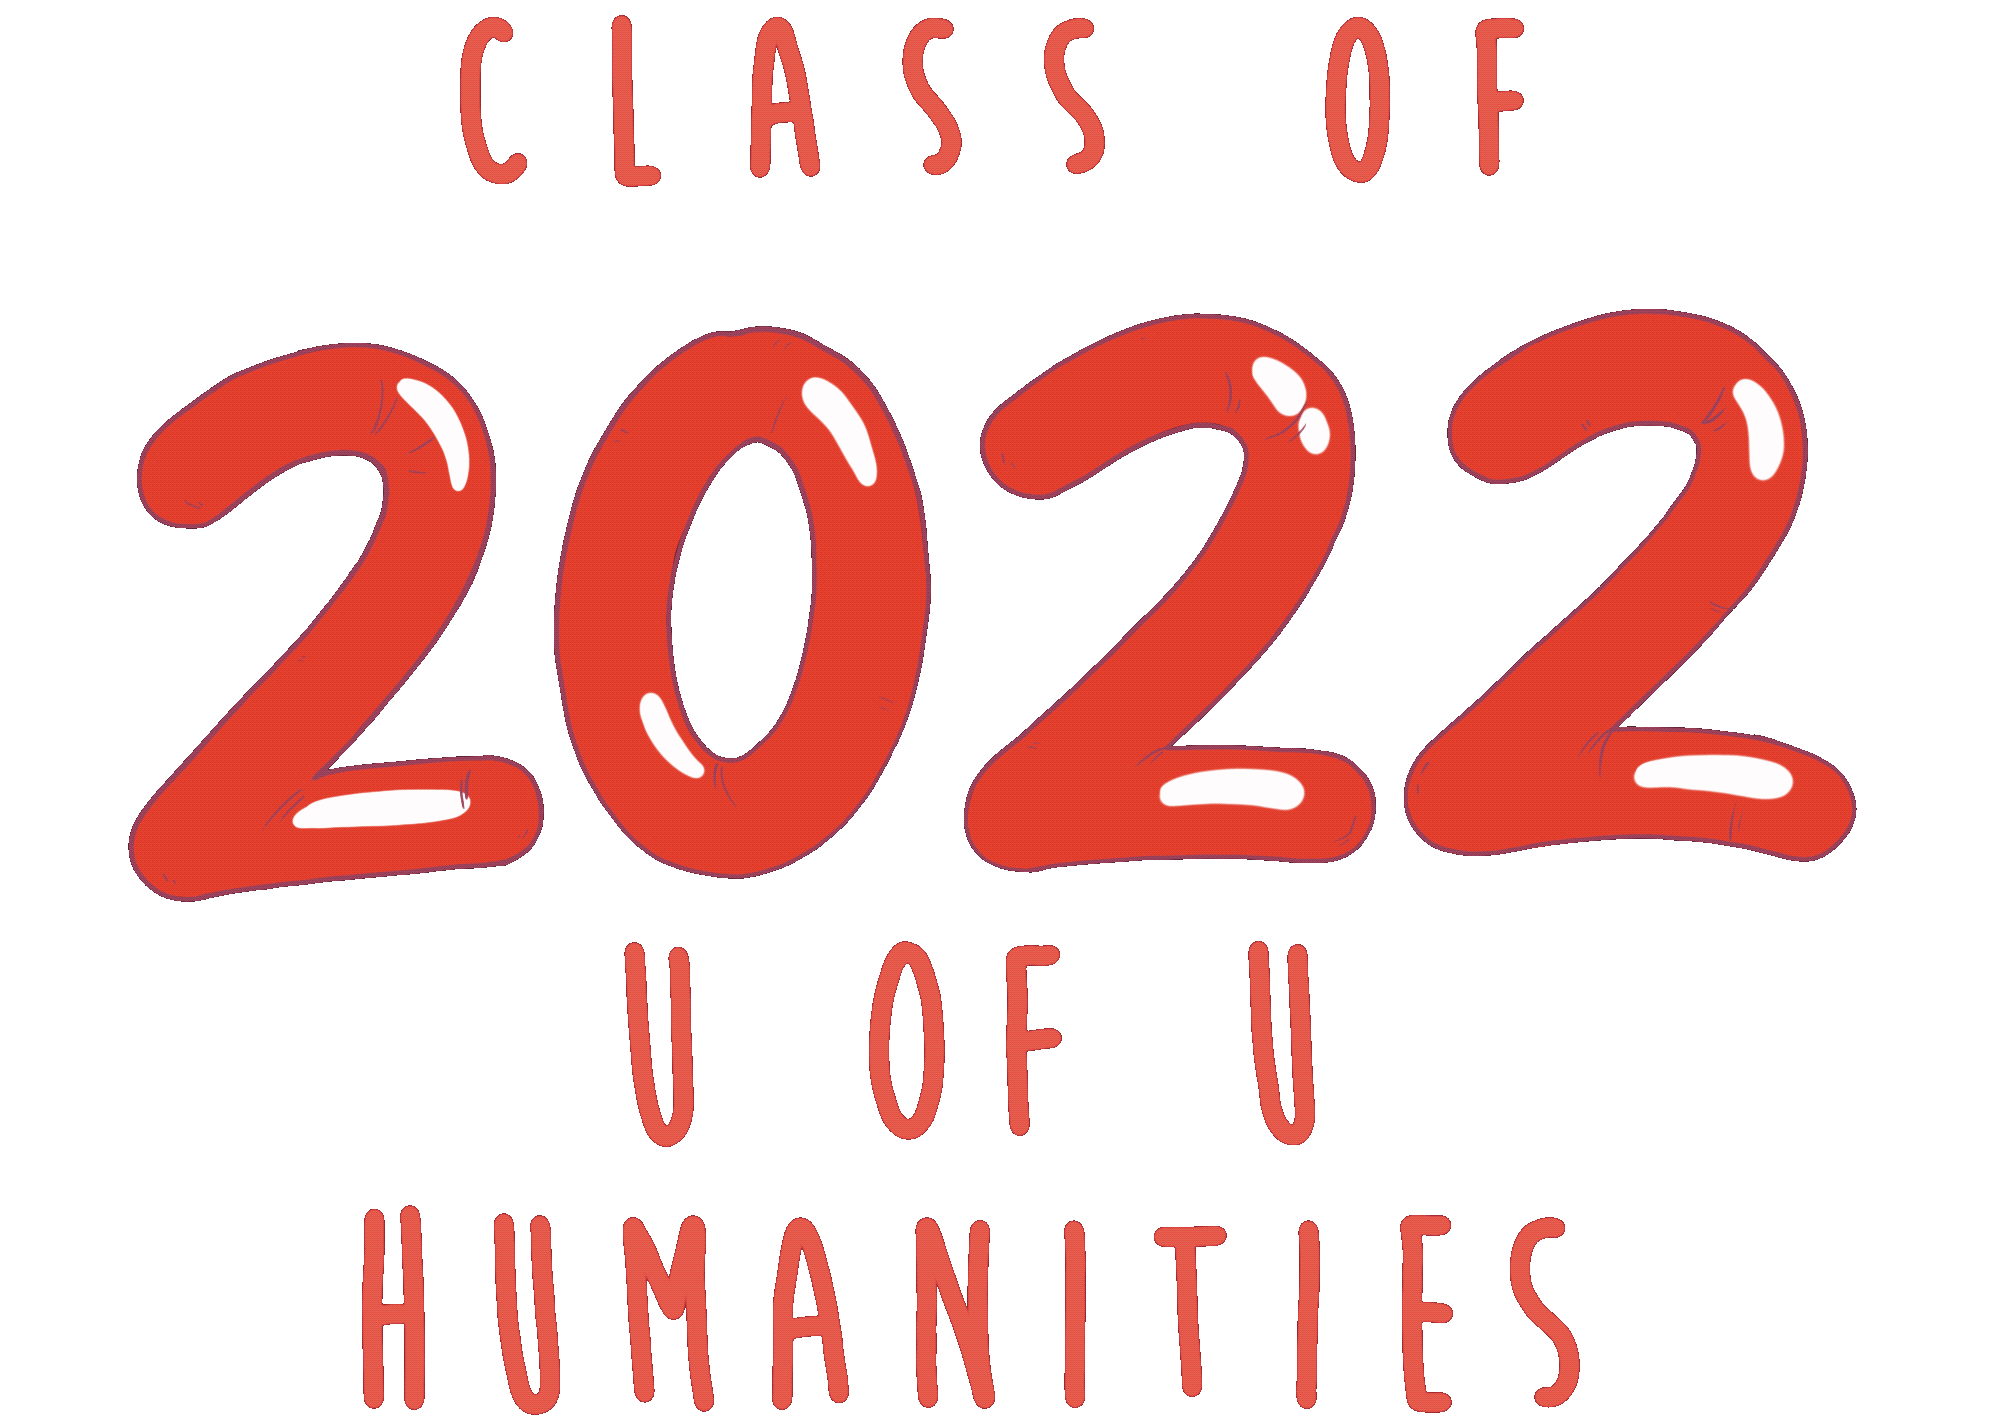 U Humanities Class of 2022